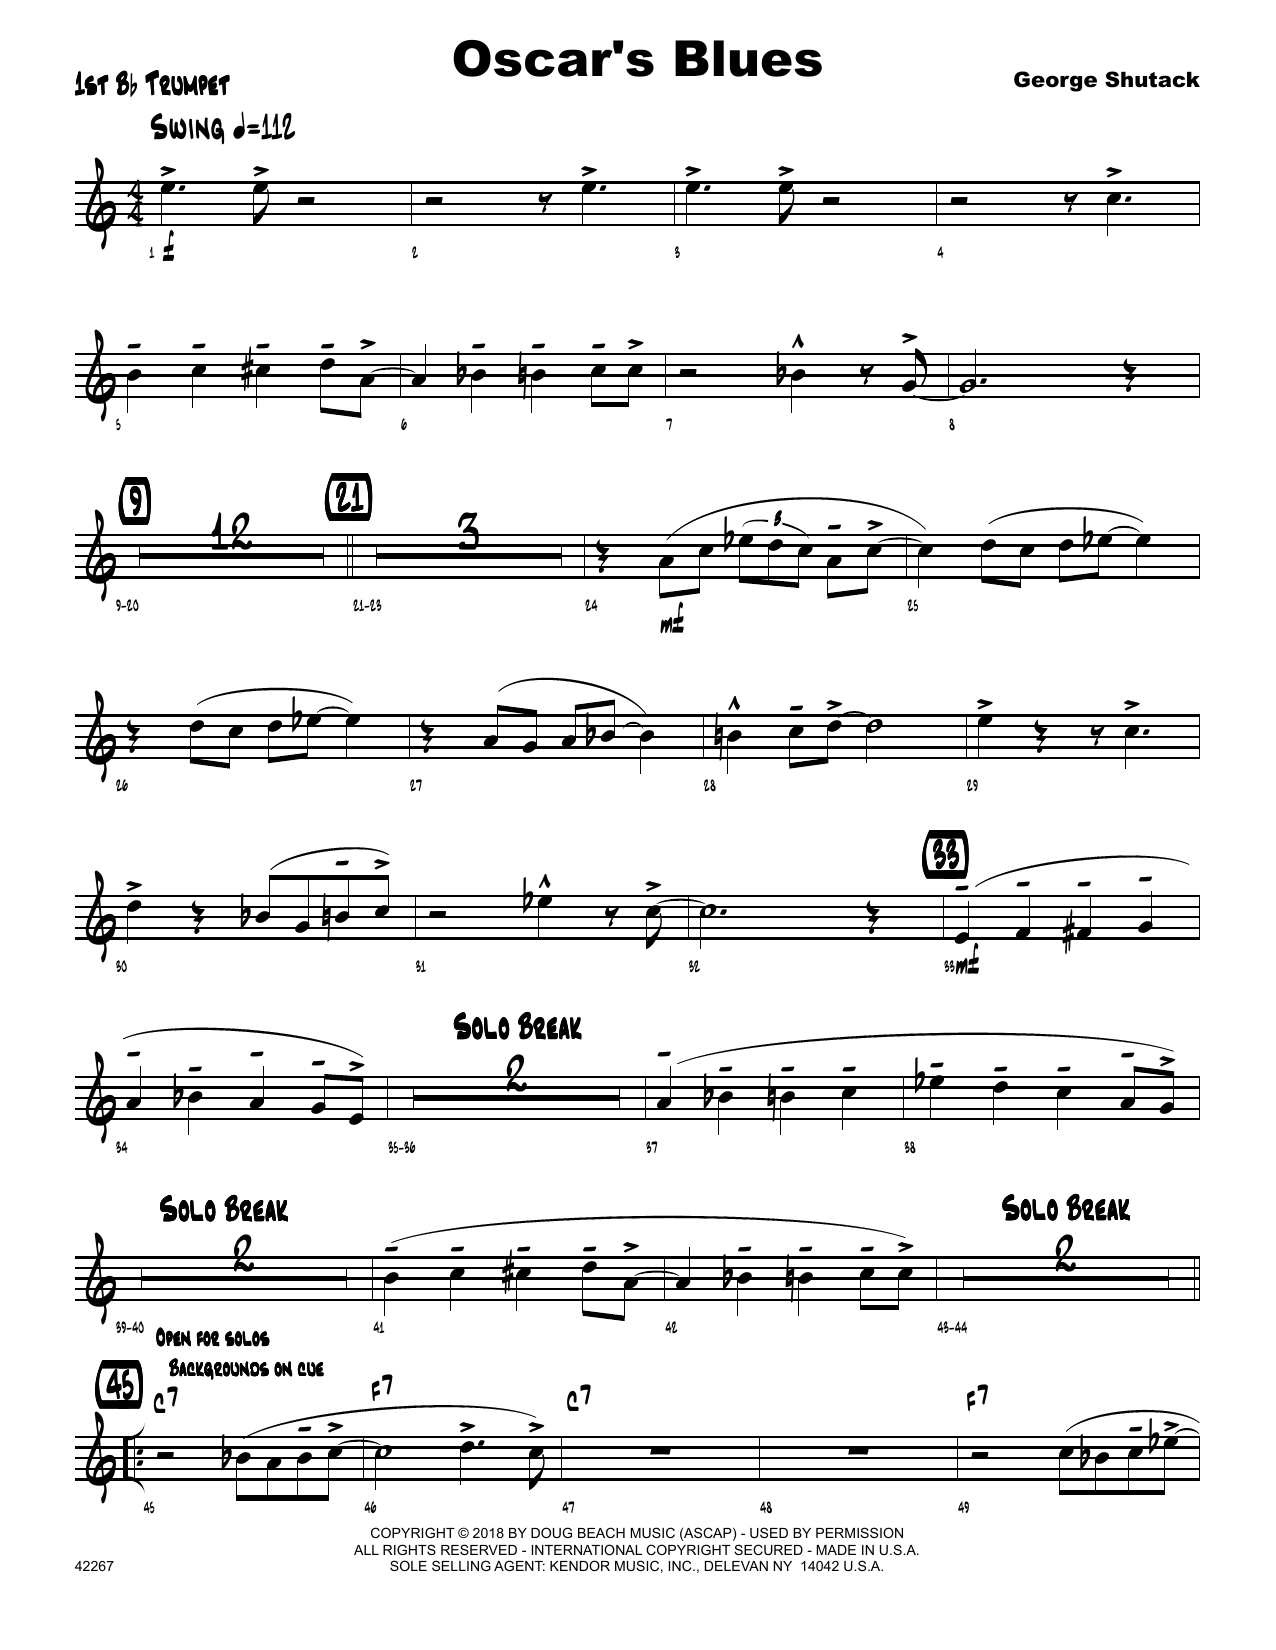 Download George Shutack Oscar's Blues - 1st Bb Trumpet Sheet Music